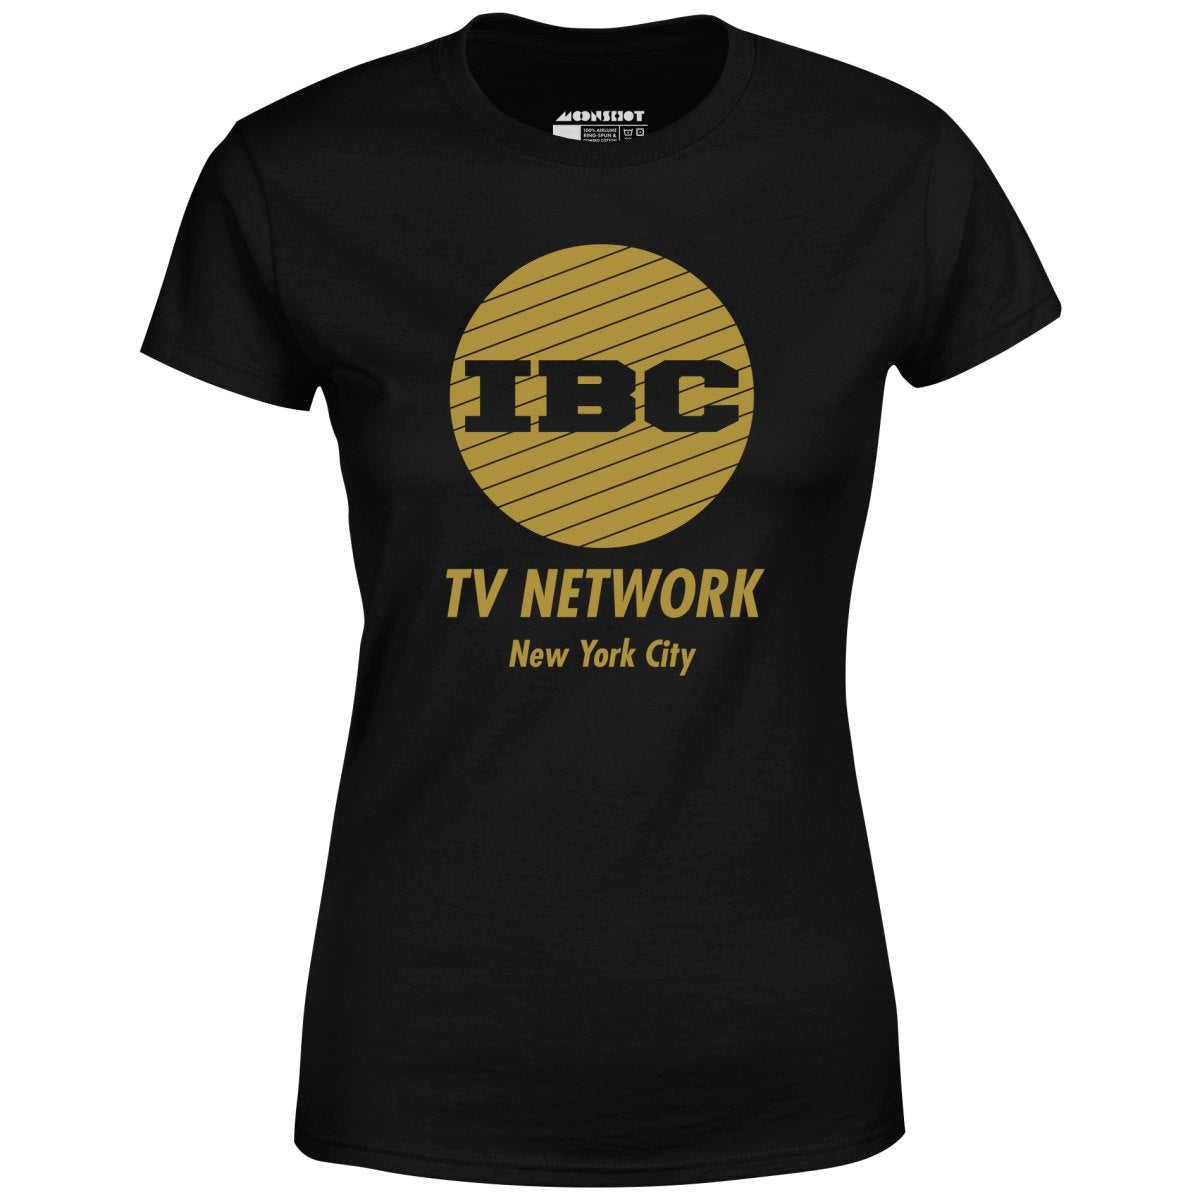 IBC TV Network - Scrooged - Women's T-Shirt